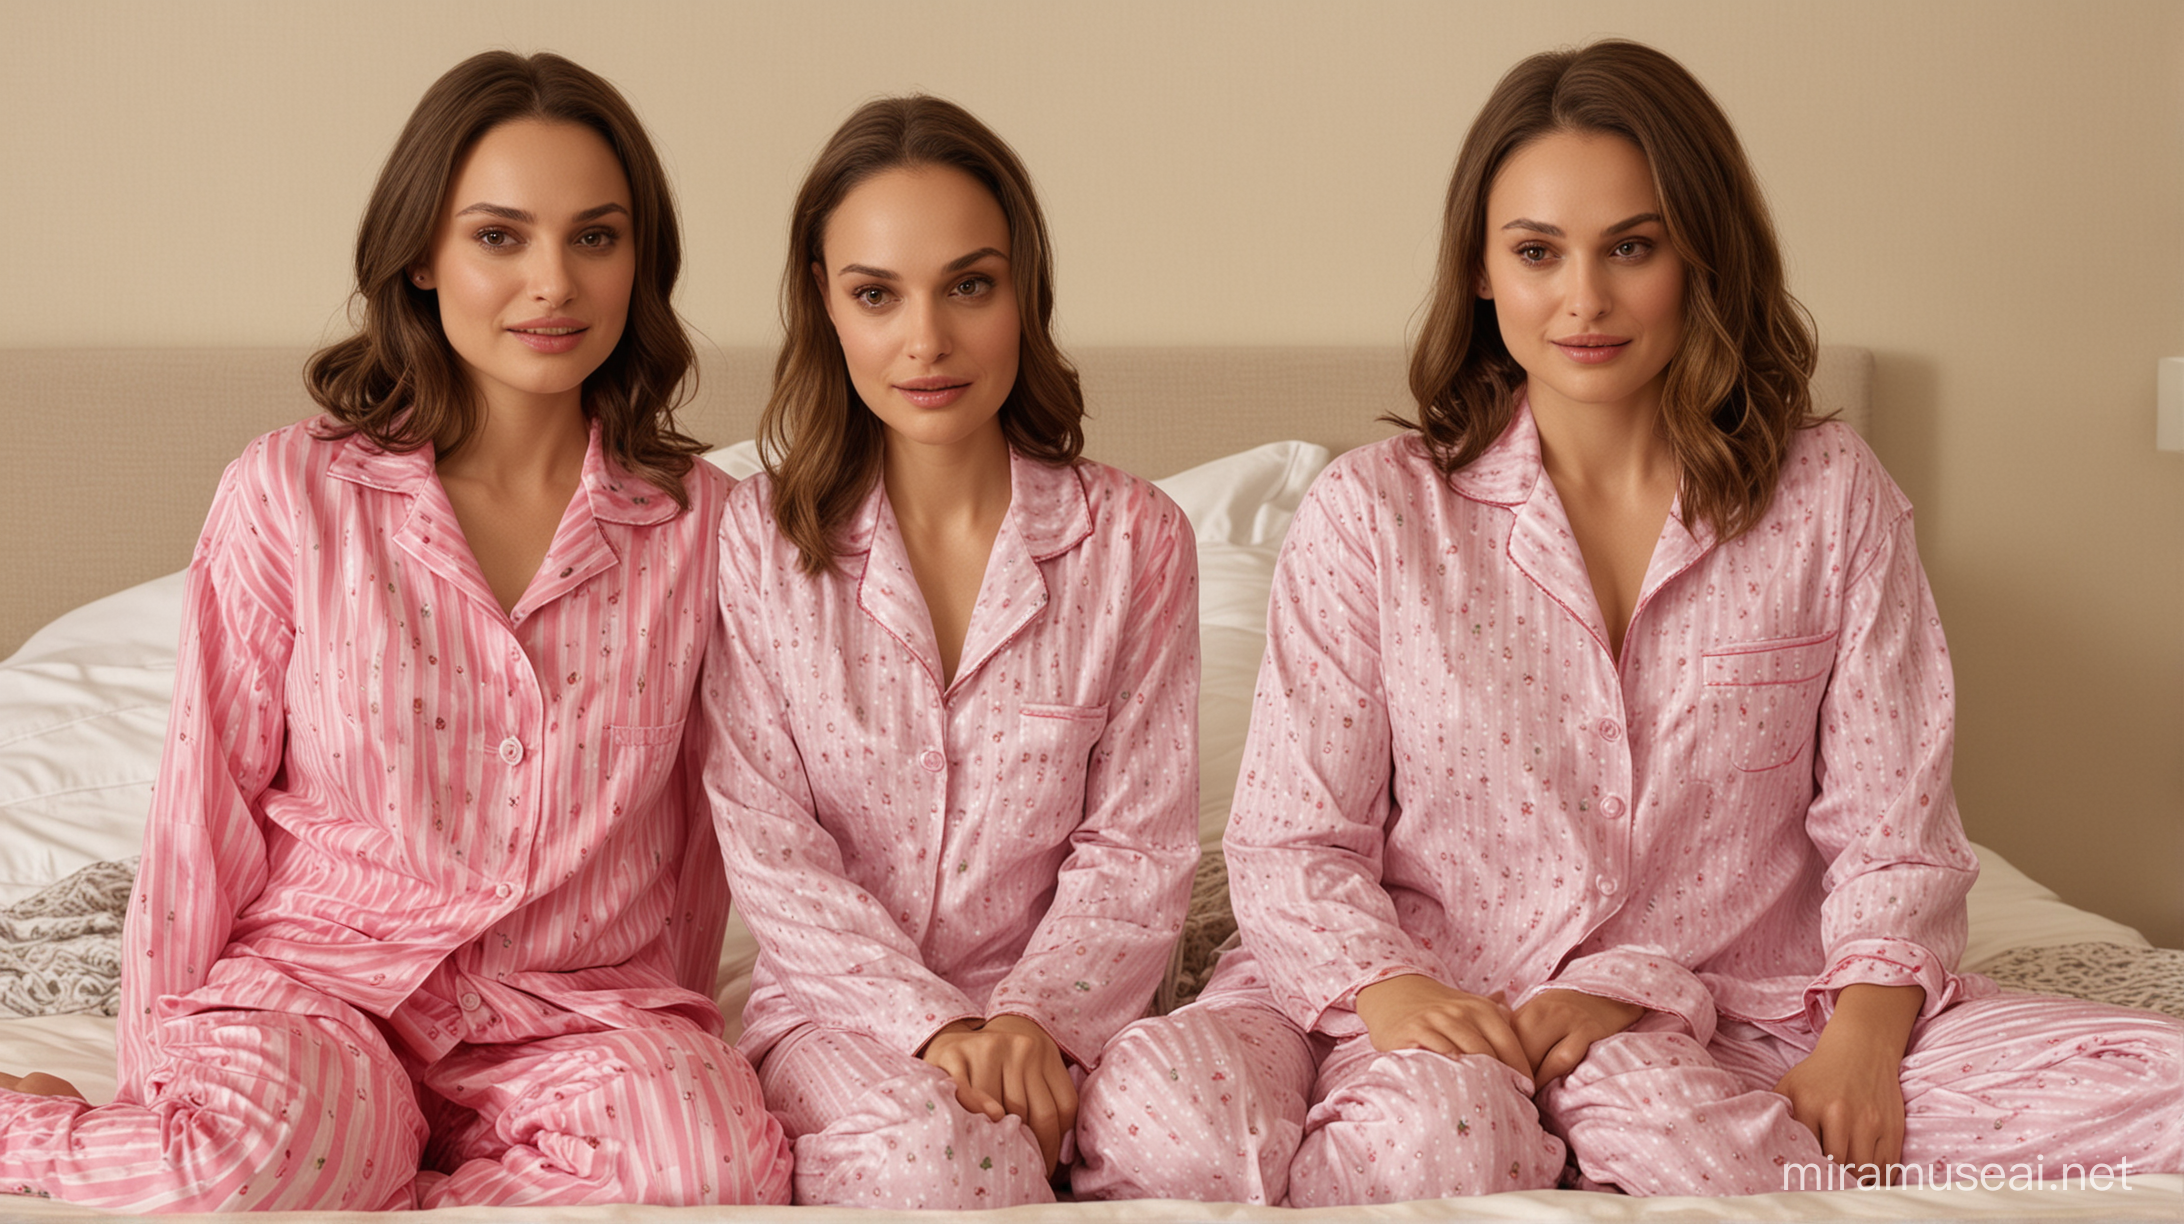 Mila Kunis and Natalie Portman Enjoying Relaxing Pajama Time Together